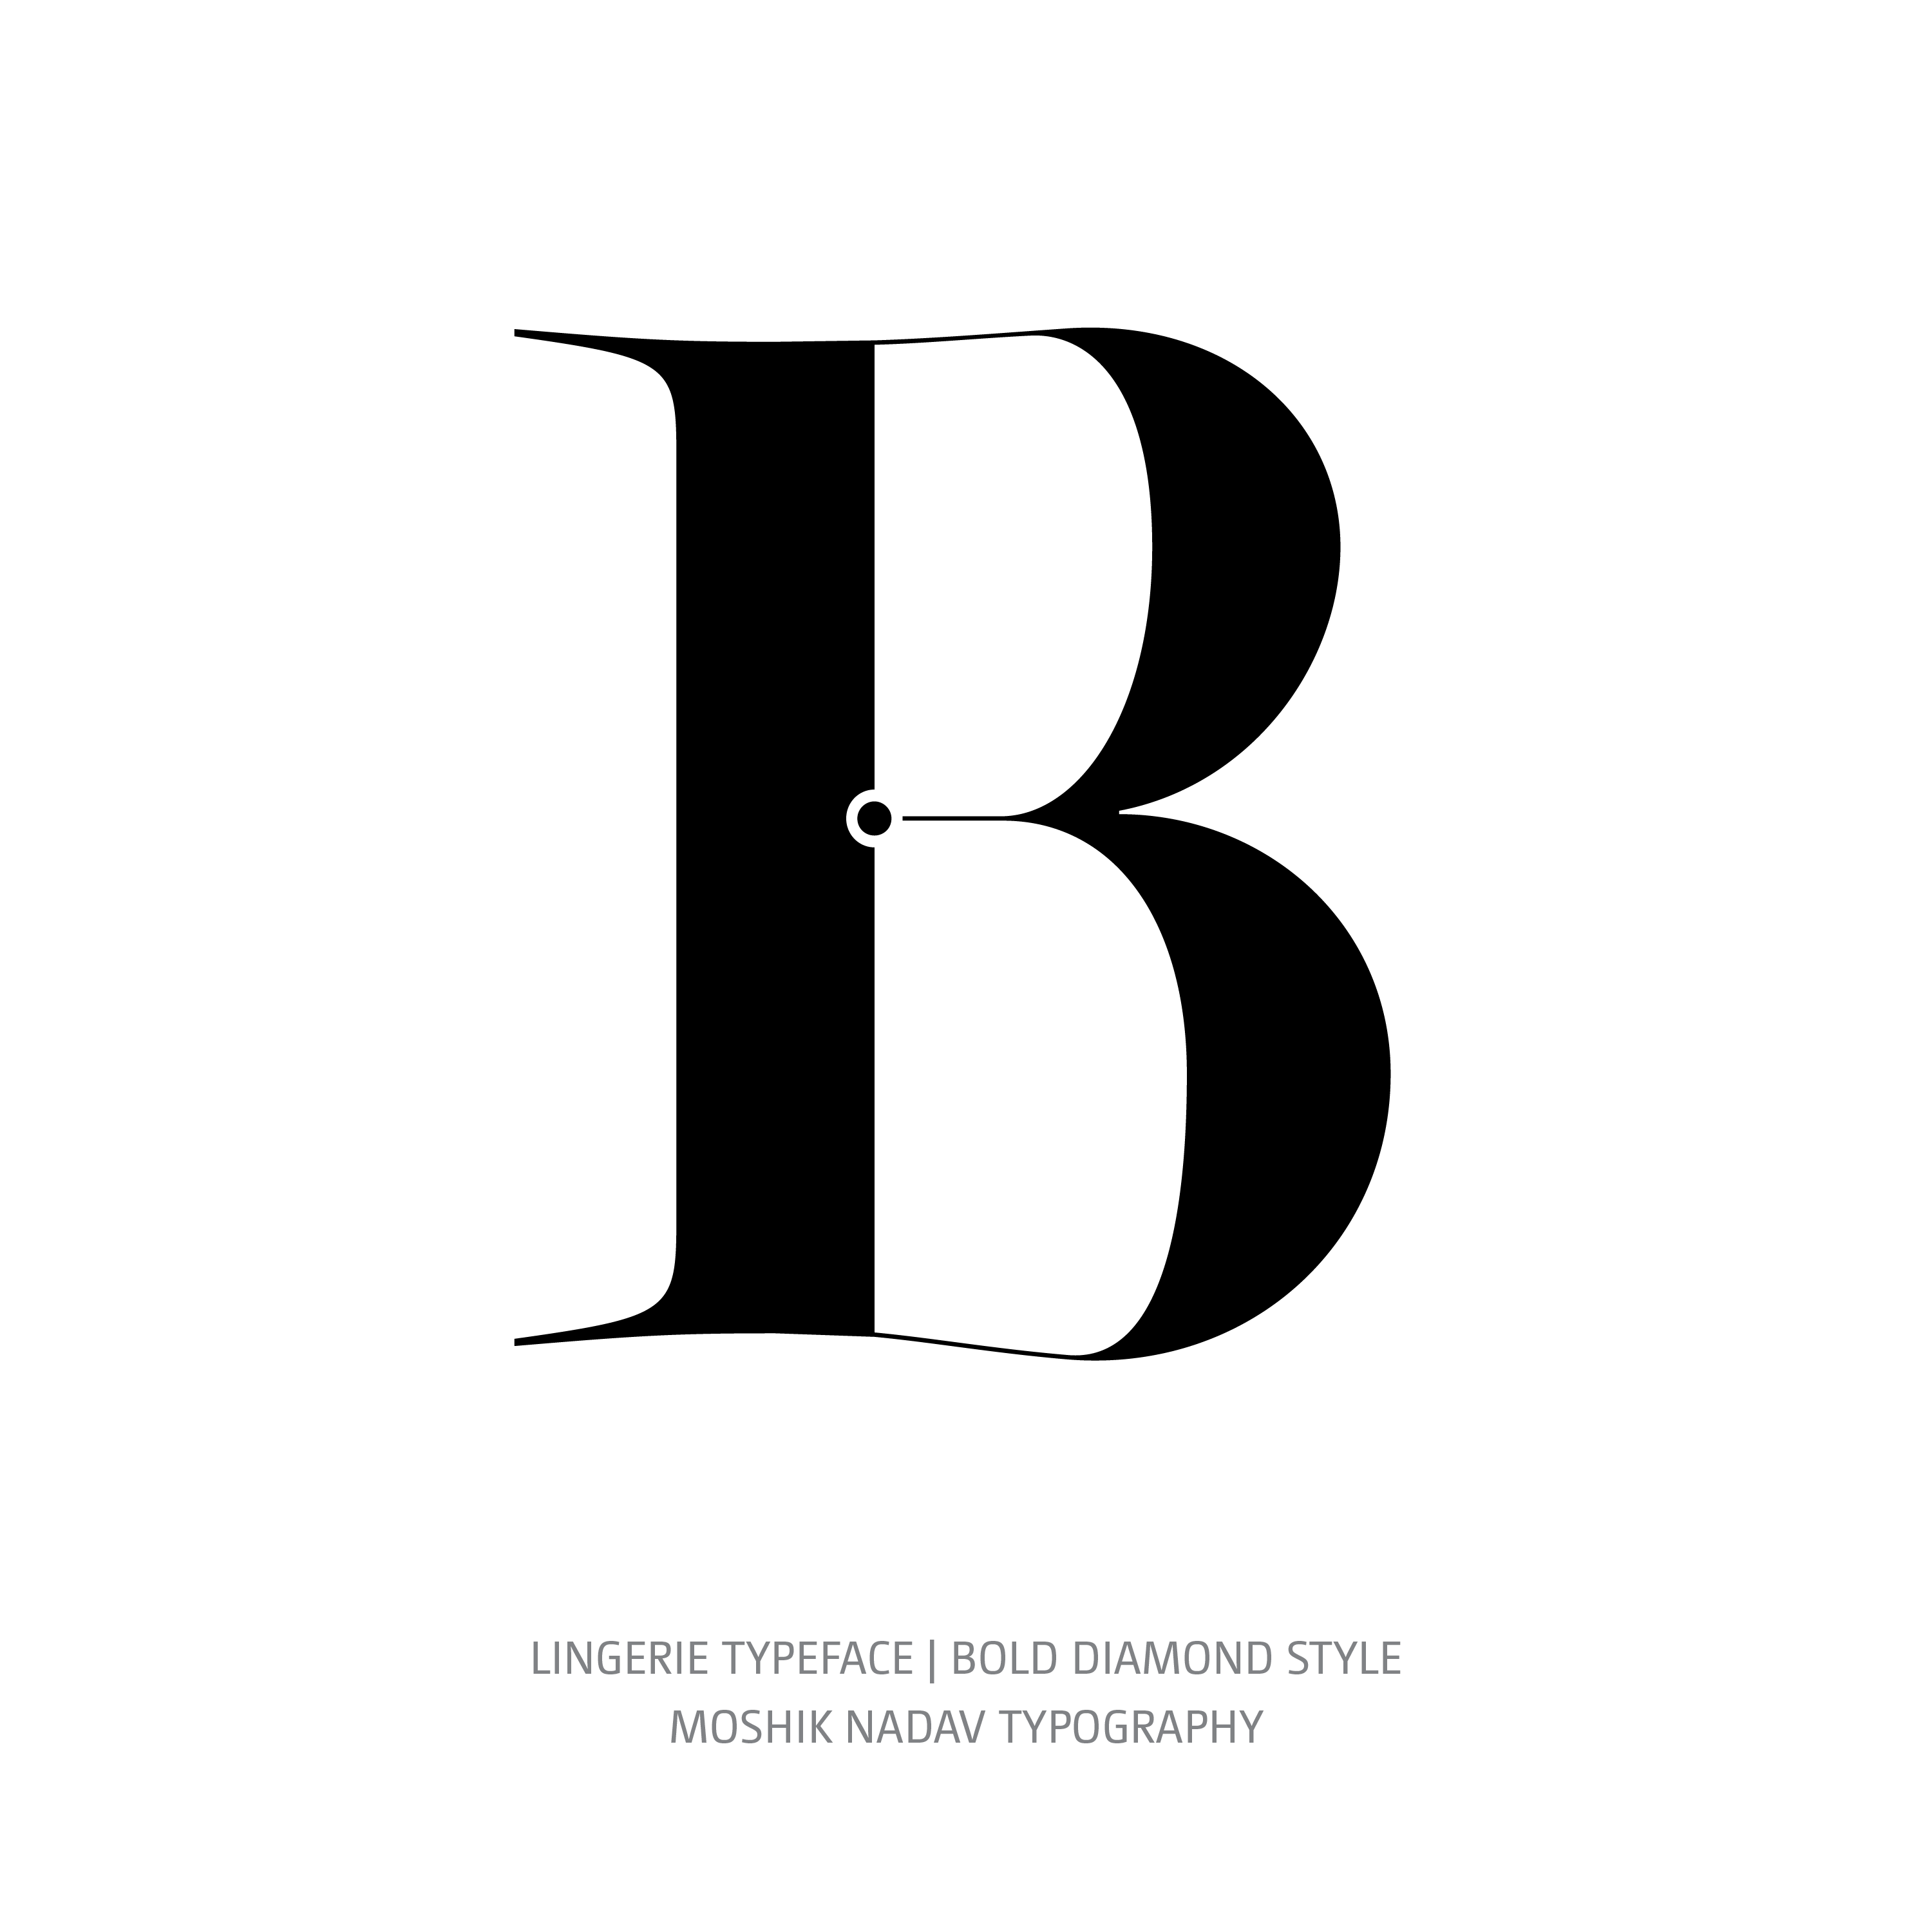 Lingerie Typeface Bold Diamond B